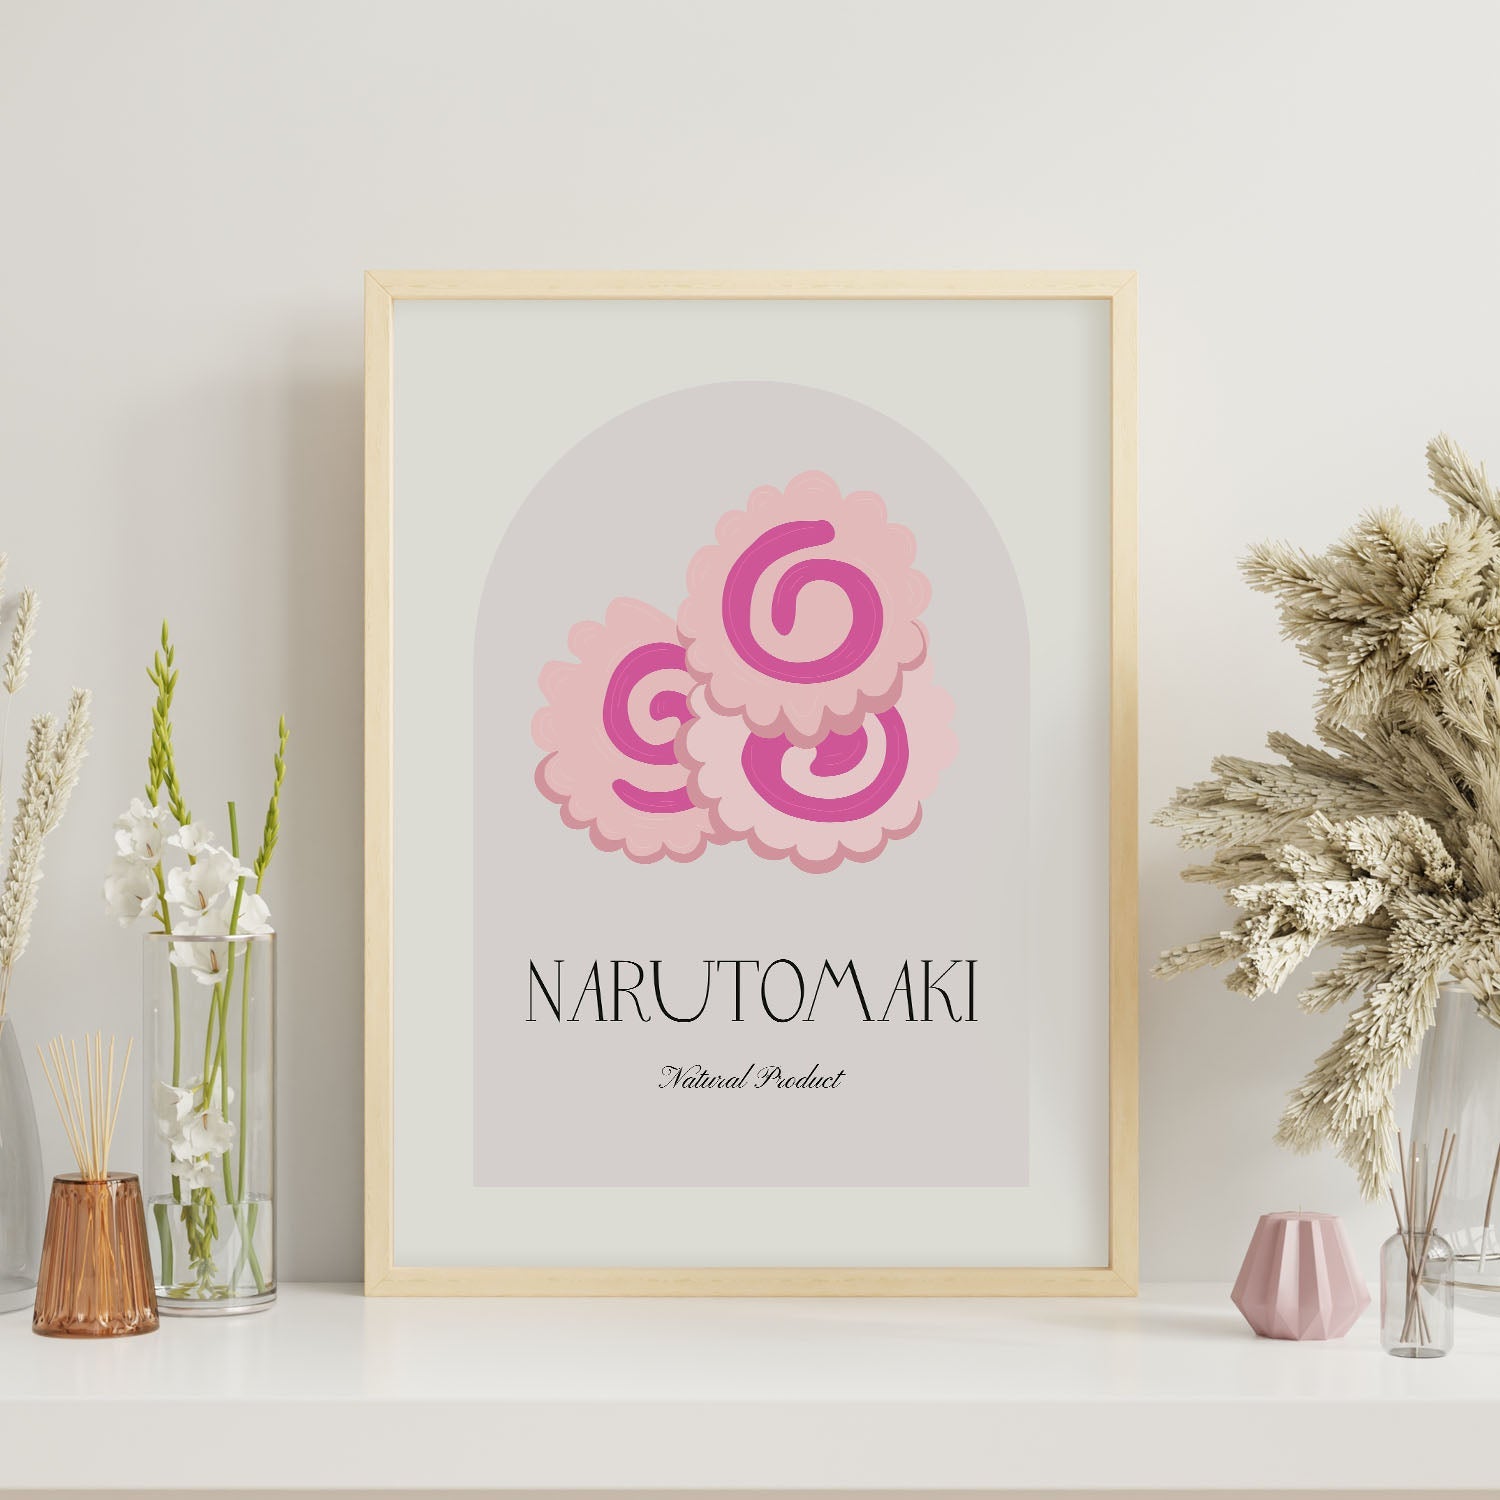 Narutomaki-Artwork-Nacnic-Nacnic Estudio SL